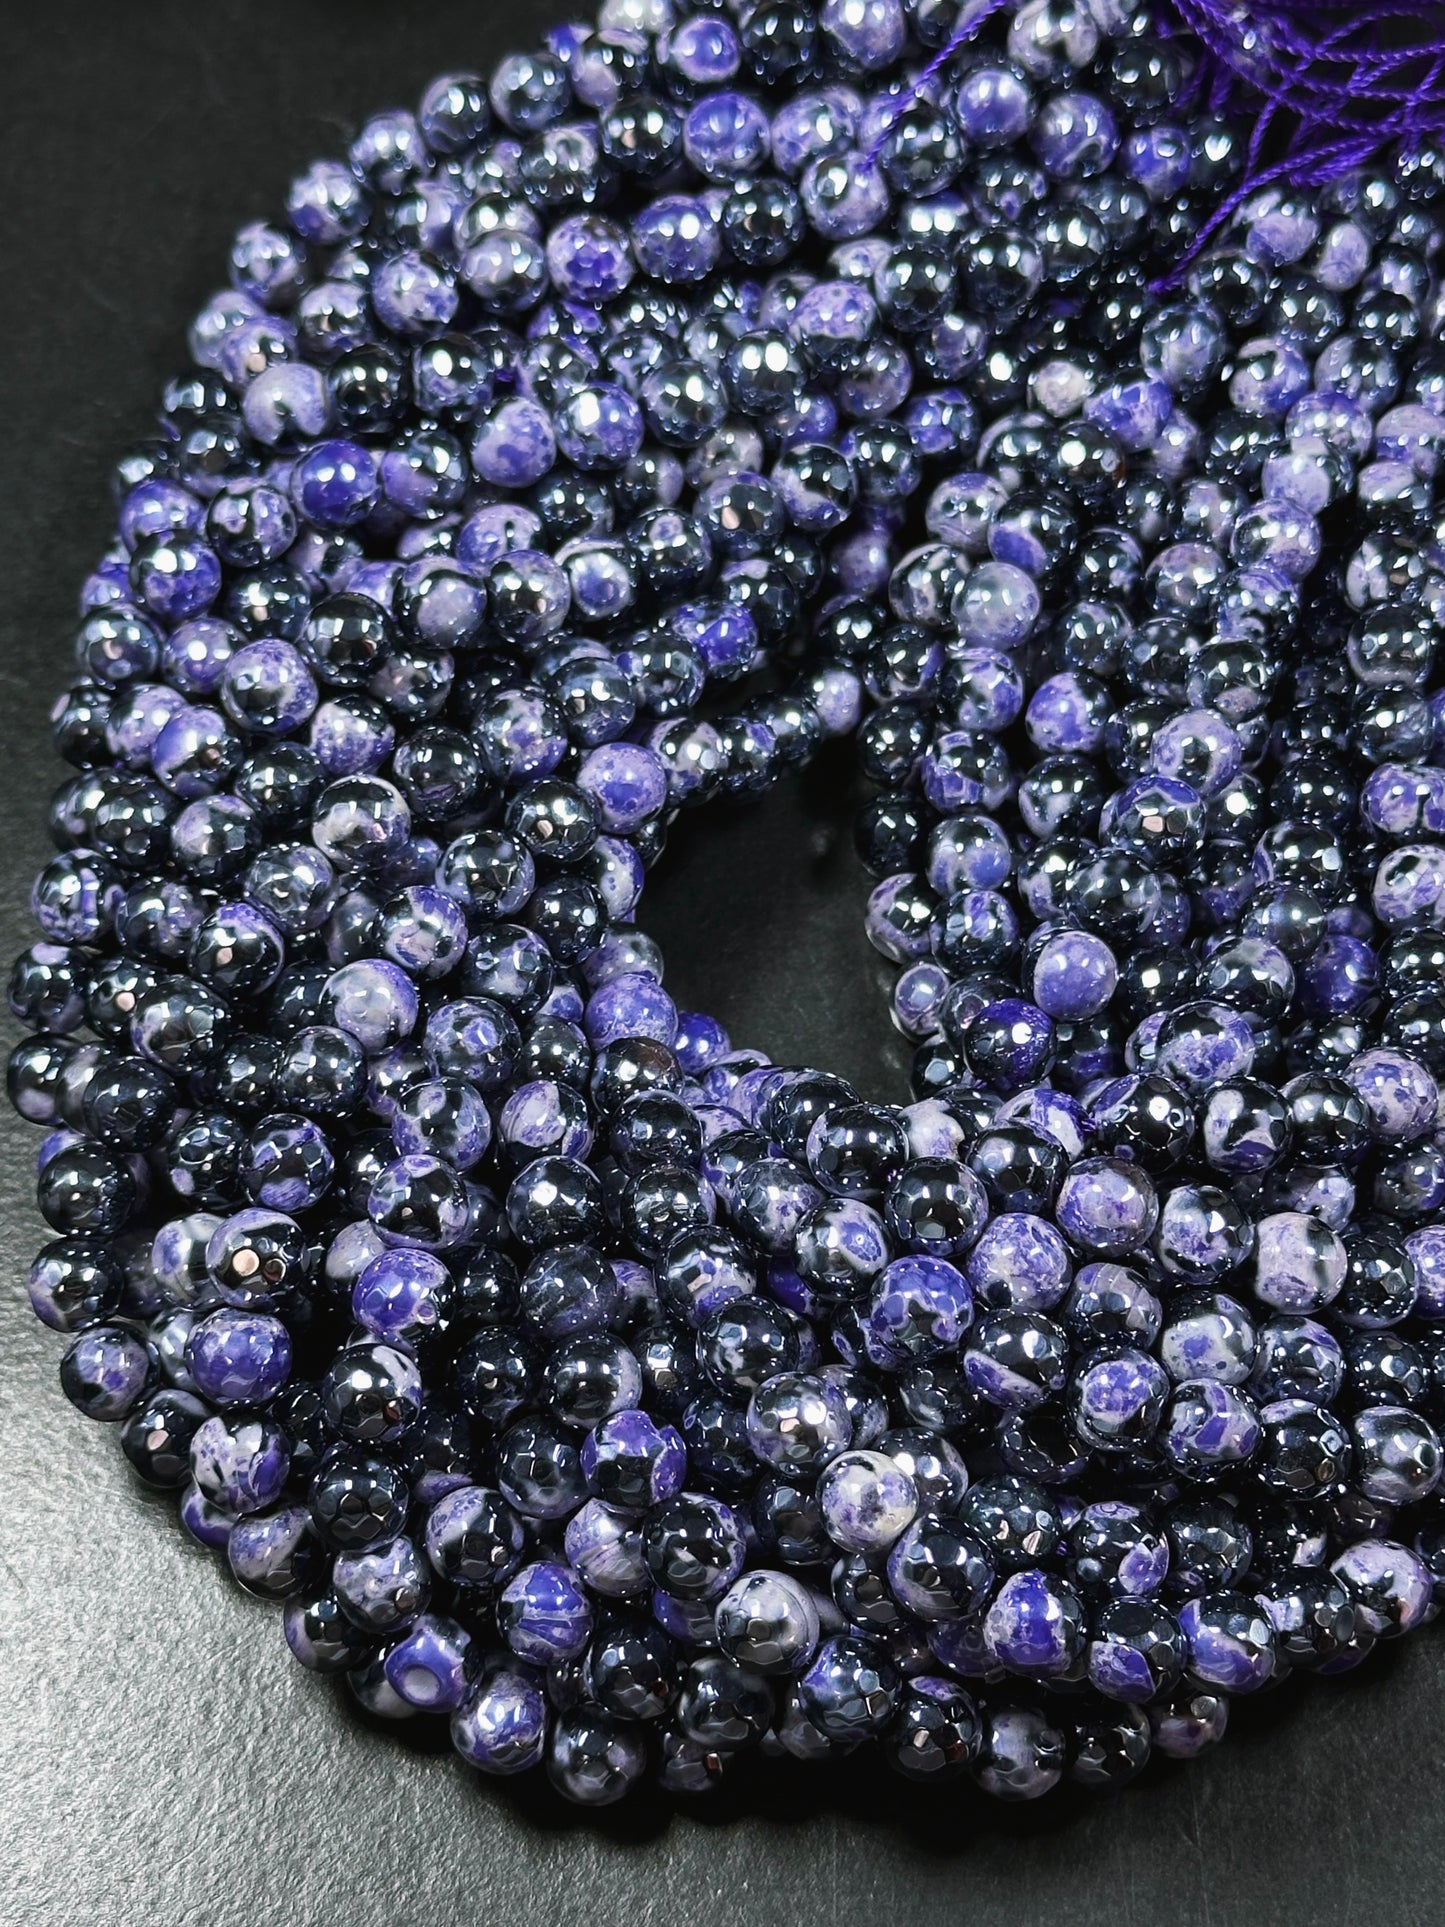 Mystic Natural Tibetan Agate Gemstone Bead Faceted 8mm 10mm Round Beads, Beautiful Mystic Purple Black Agate Stone Beads, Full Strand 15.5"